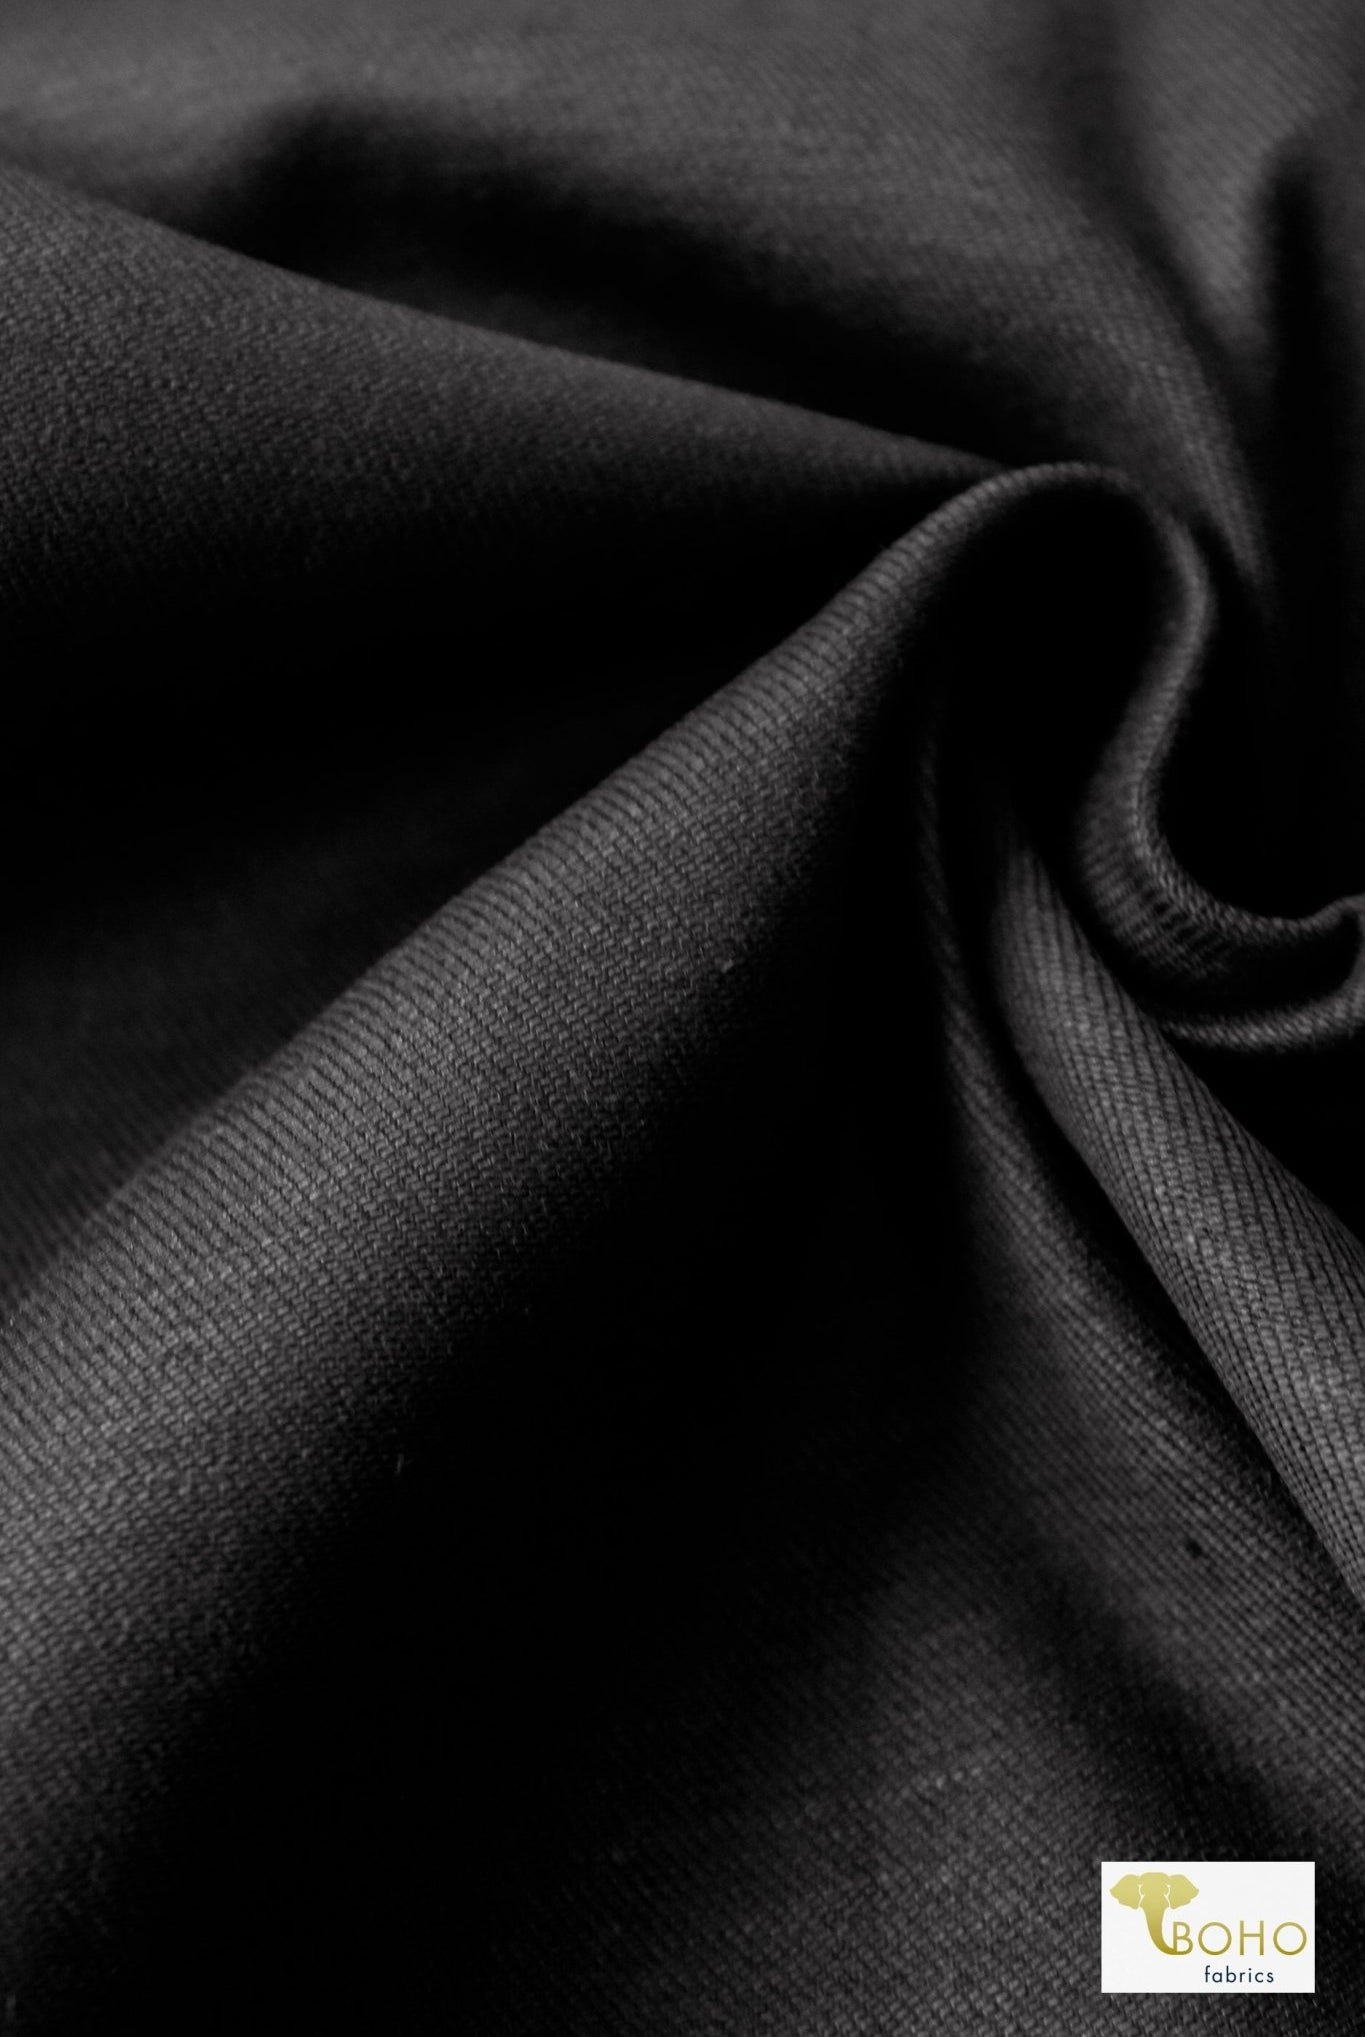 Black Foiled Twill, Cotton Woven - Boho Fabrics